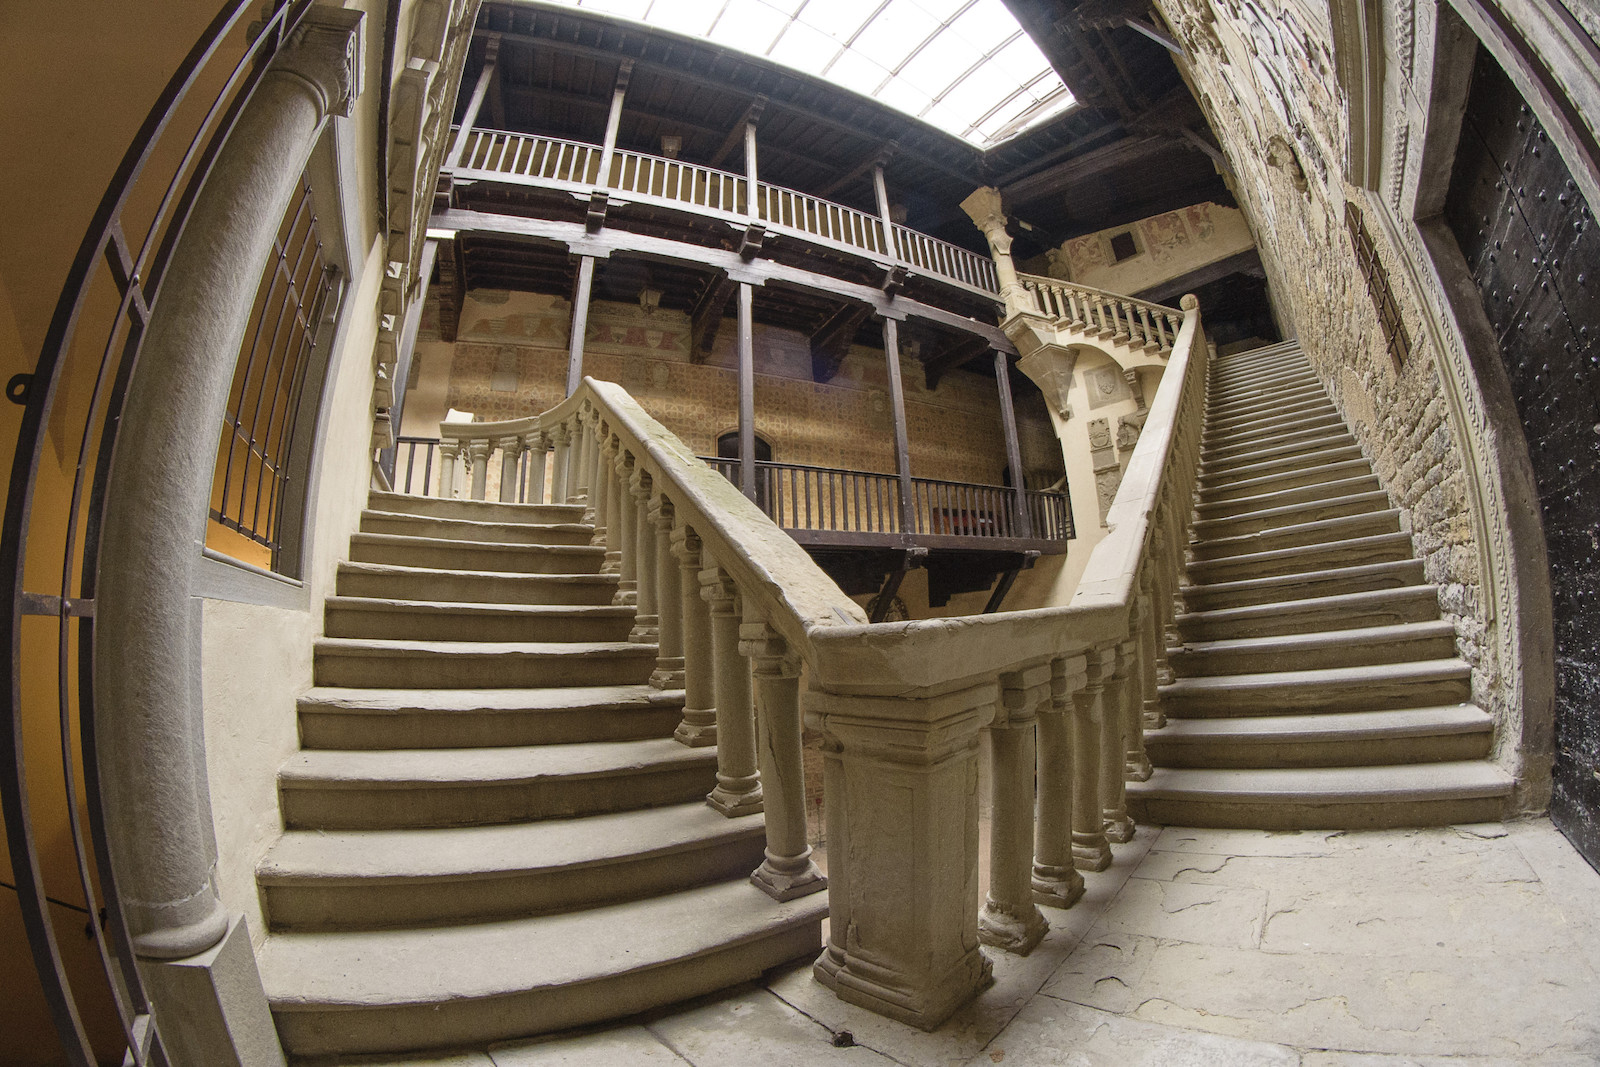 The stairways to Poppi Castle